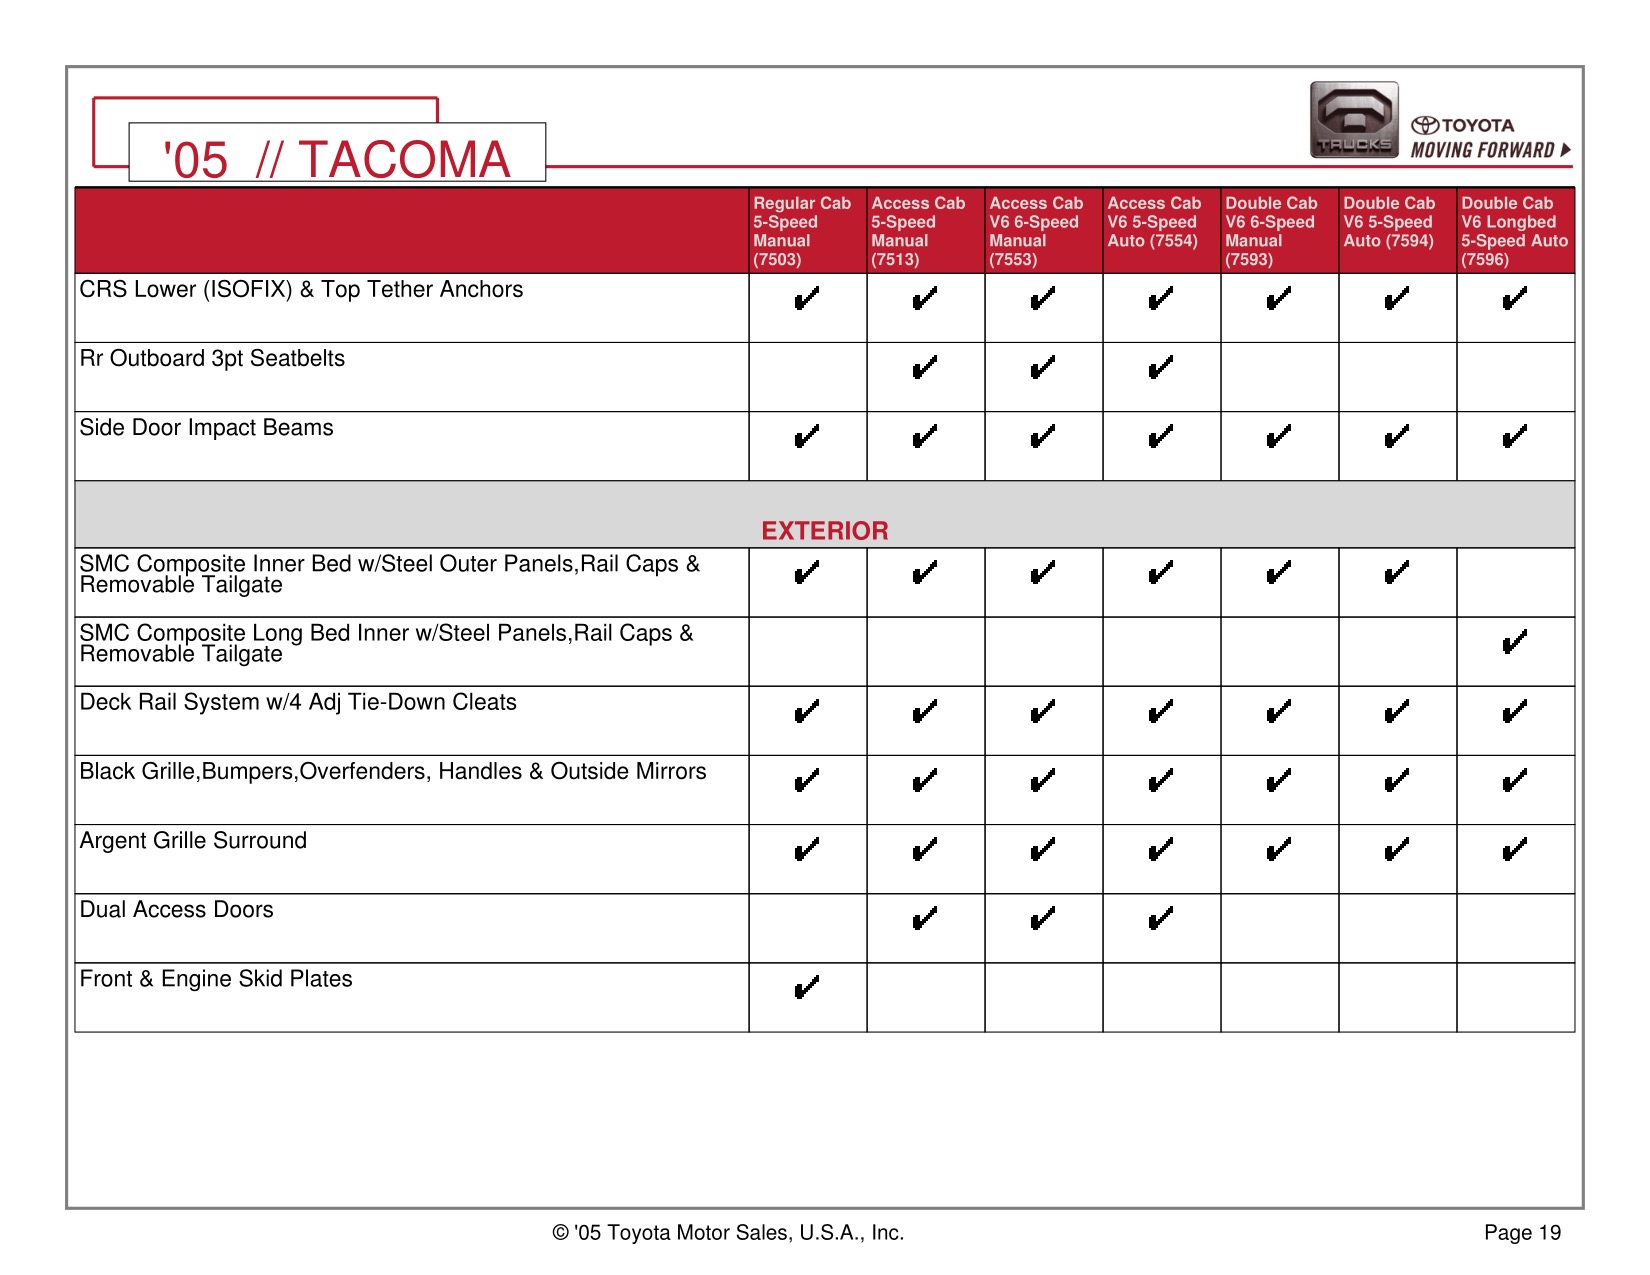 2005 Toyota Tacoma 4x4 Brochure Page 11